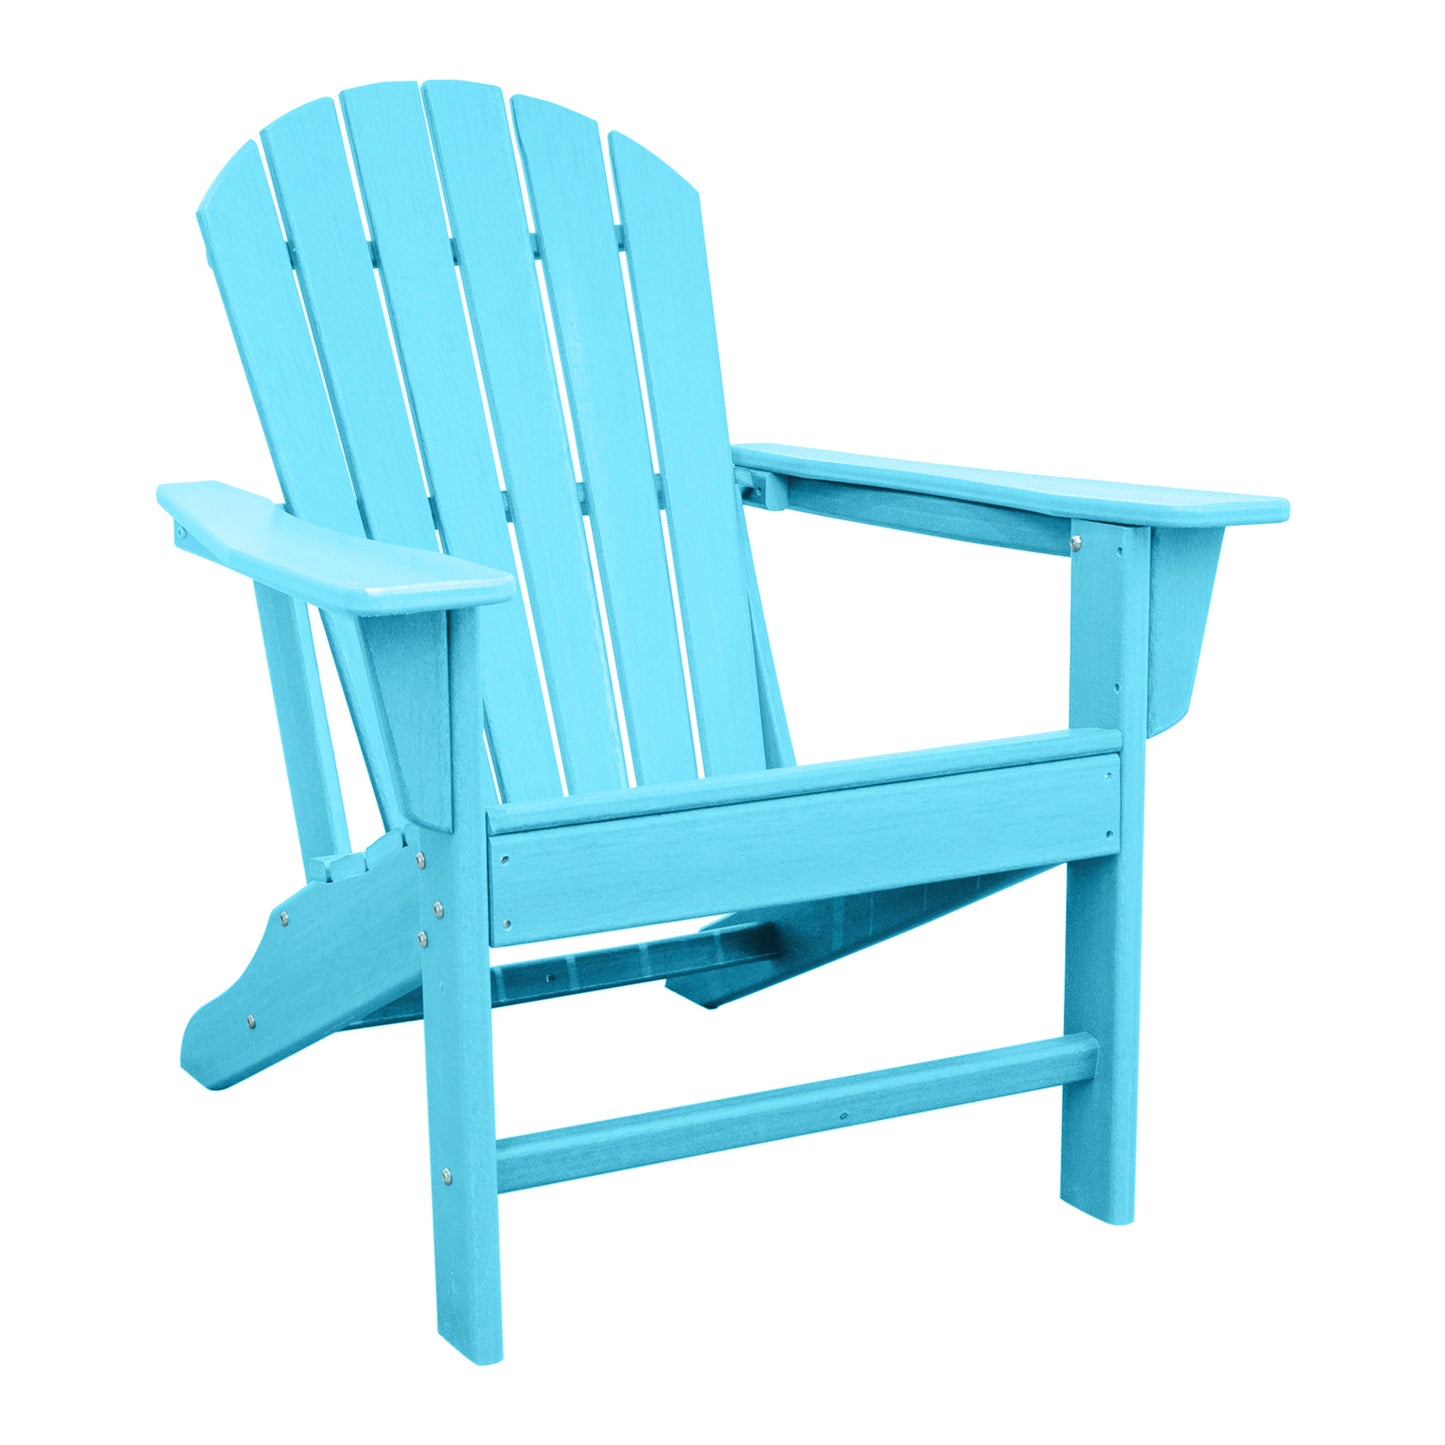 UM HDPE Resin Wood Adirondack Chair - Blue